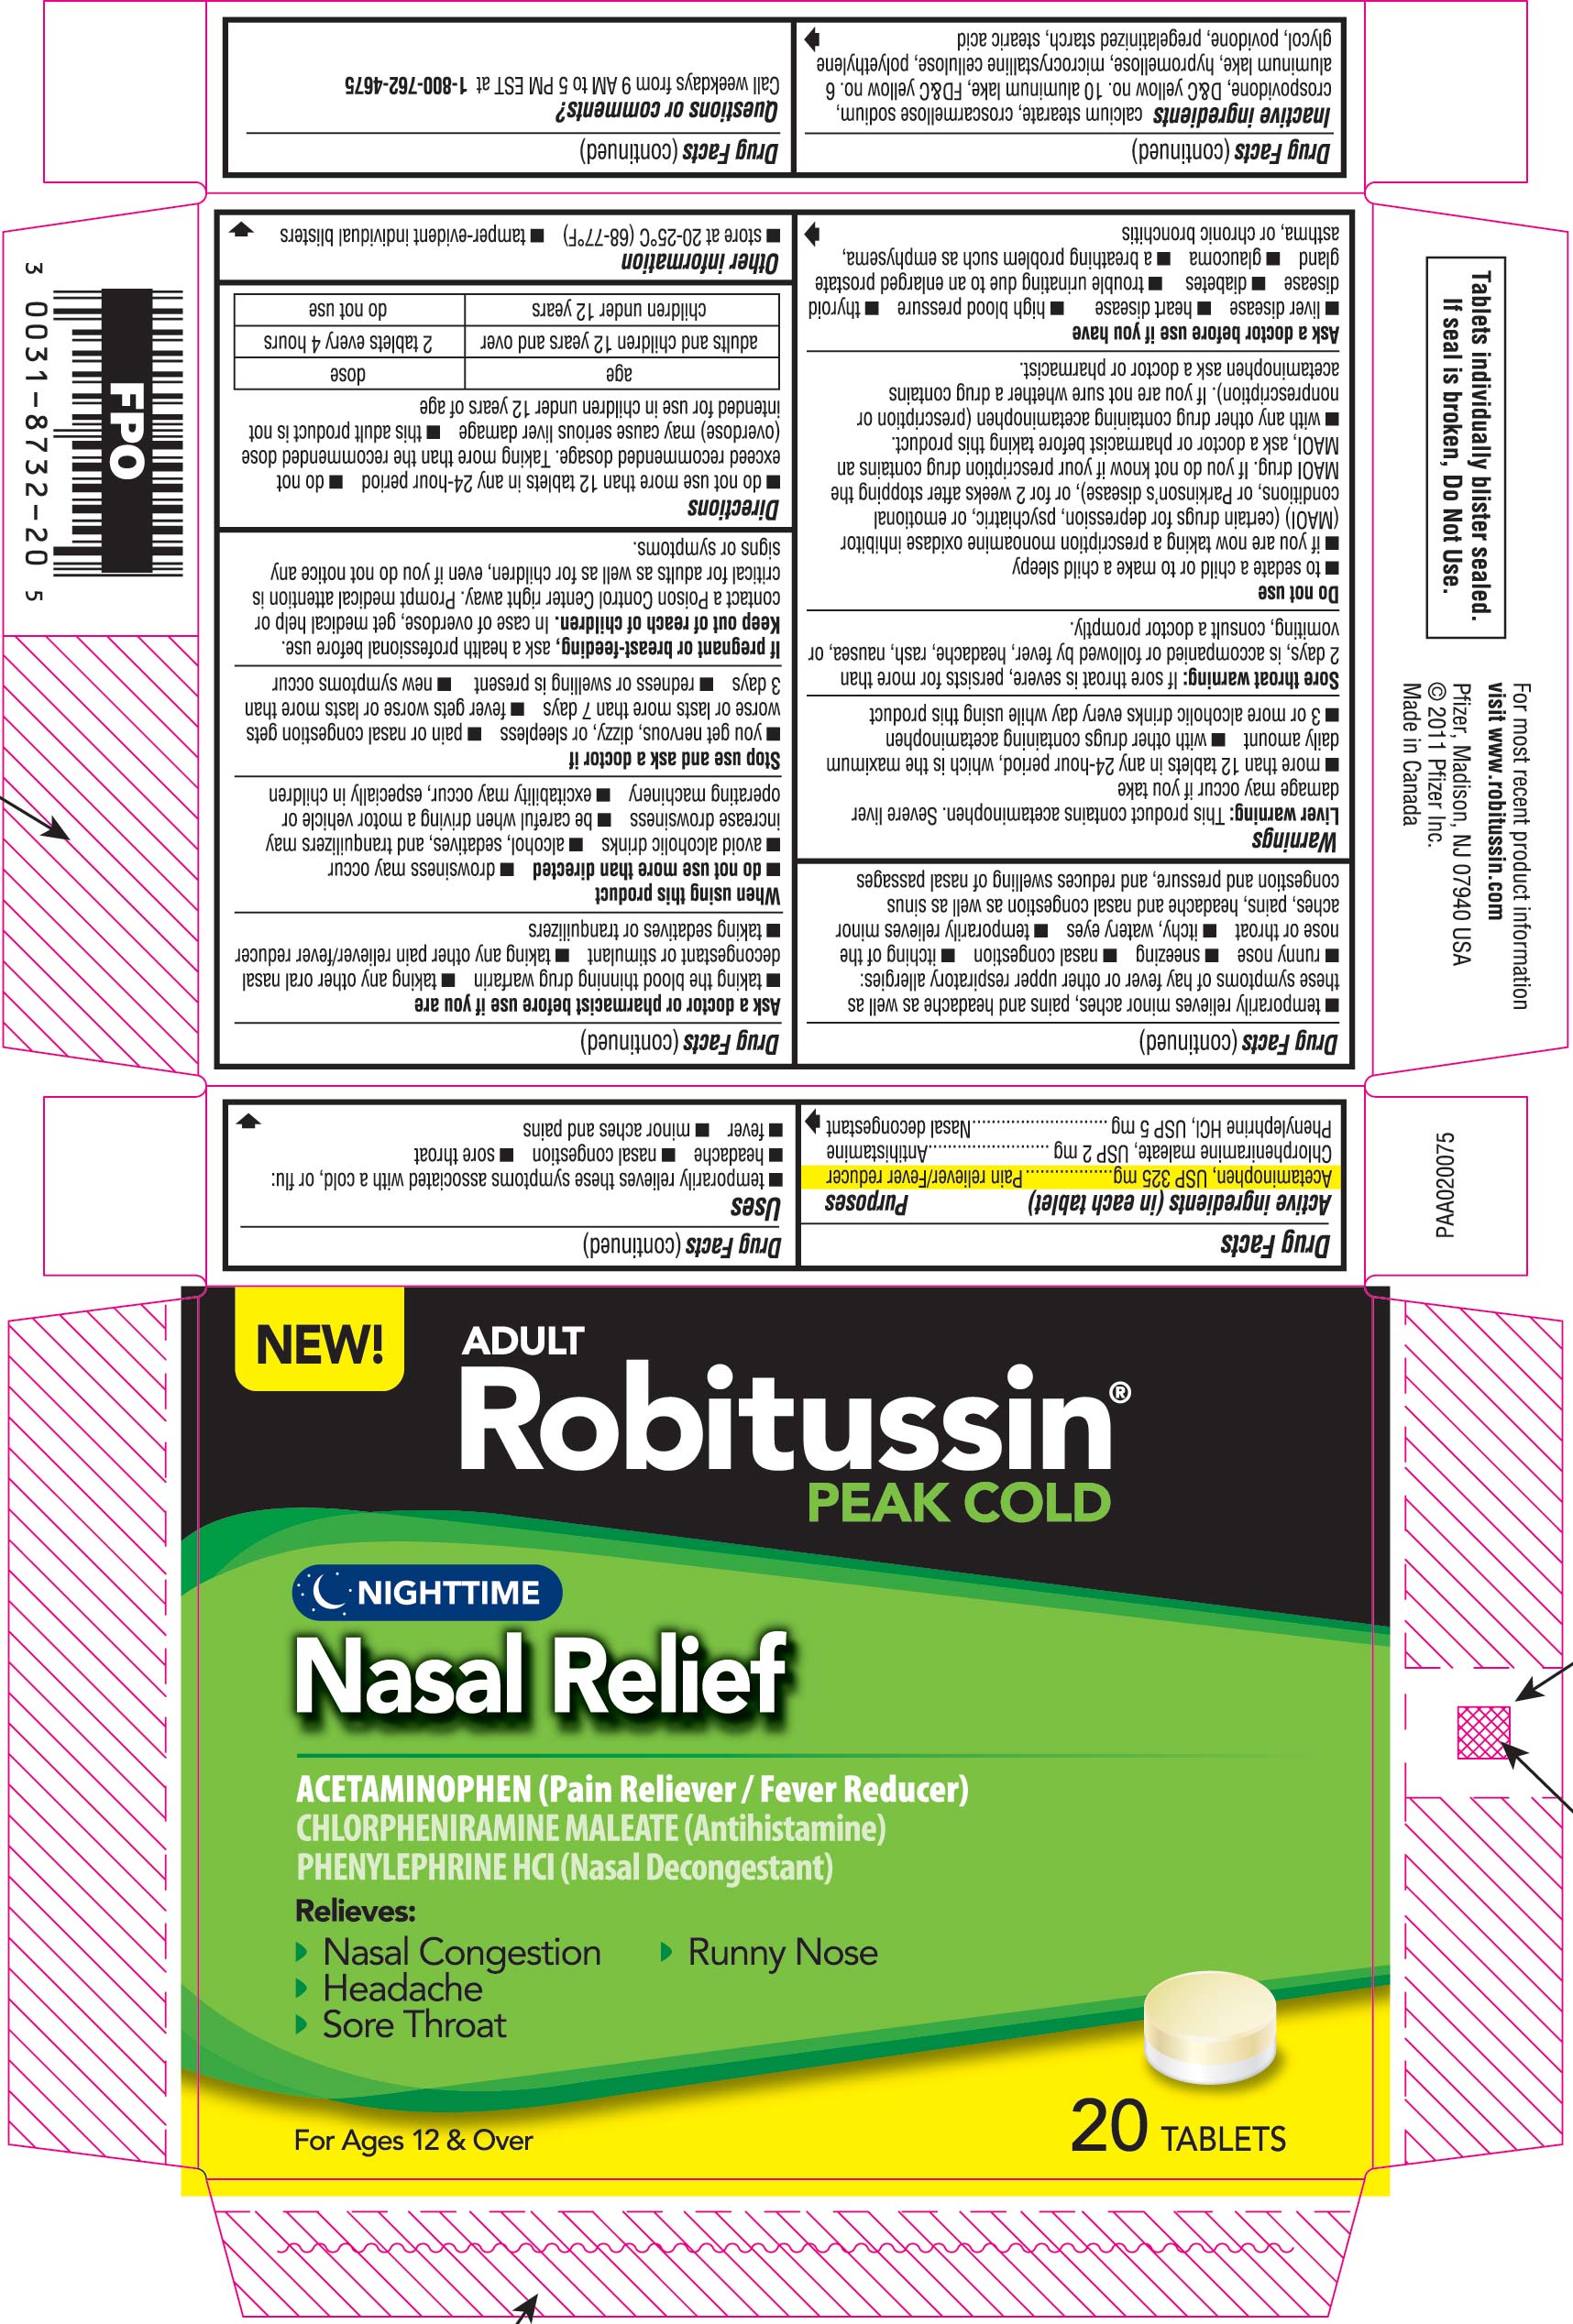 Robitussin Peak Cold Nighttime Nasal Relief Packaging